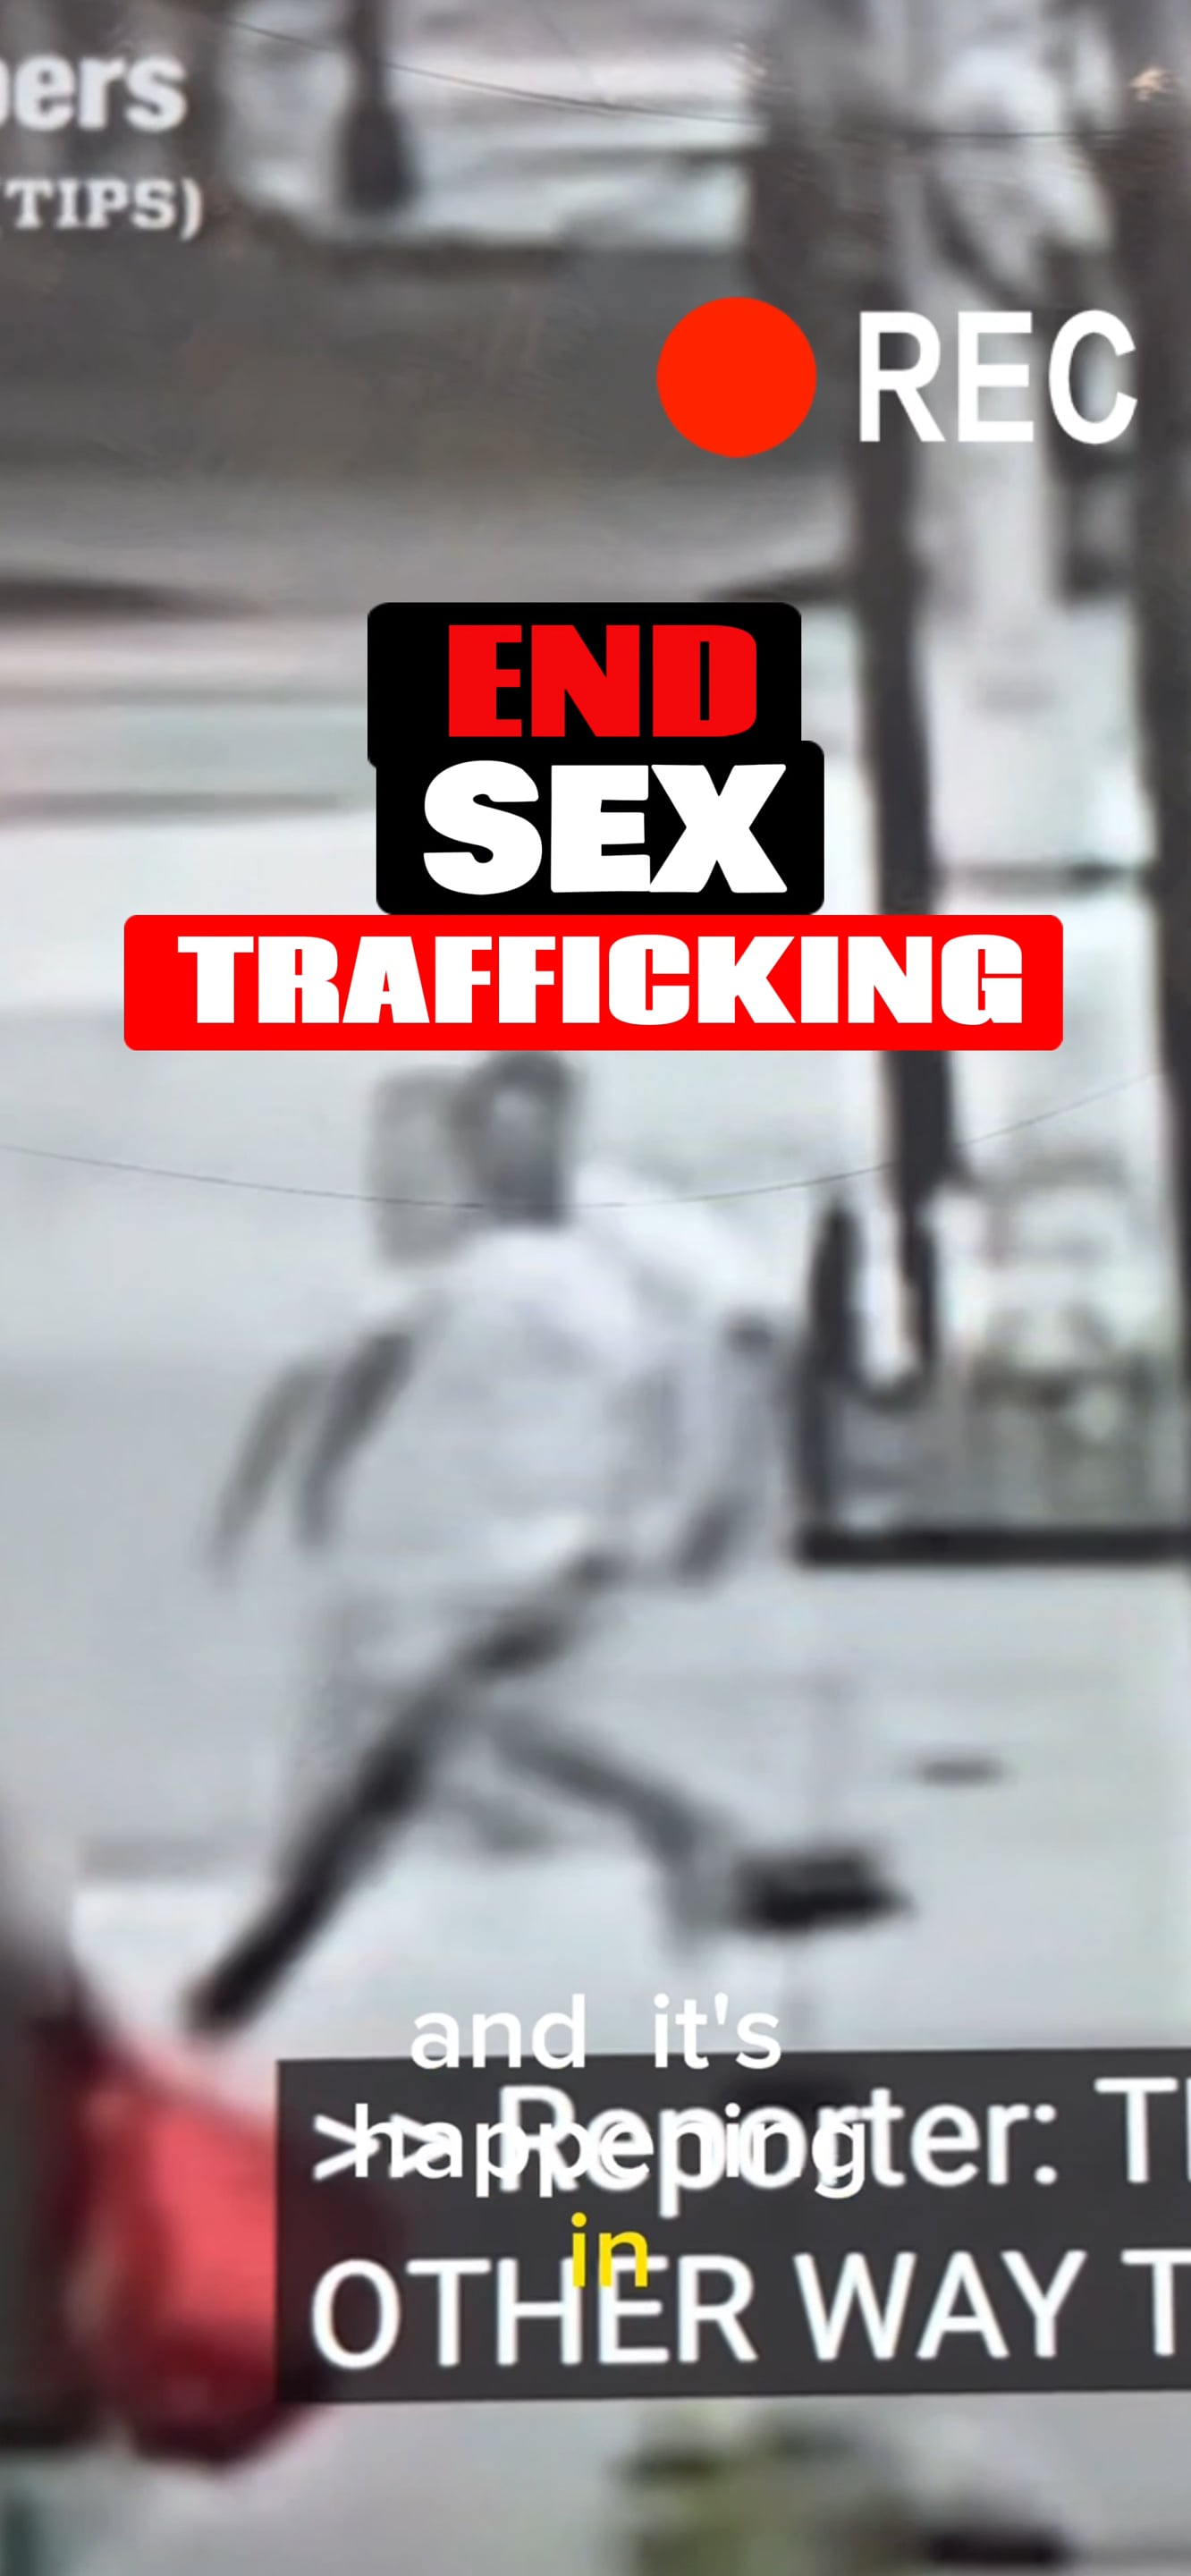 Ivan Sanchez Vs Houston Child Sex Trafficking on Vimeo pic